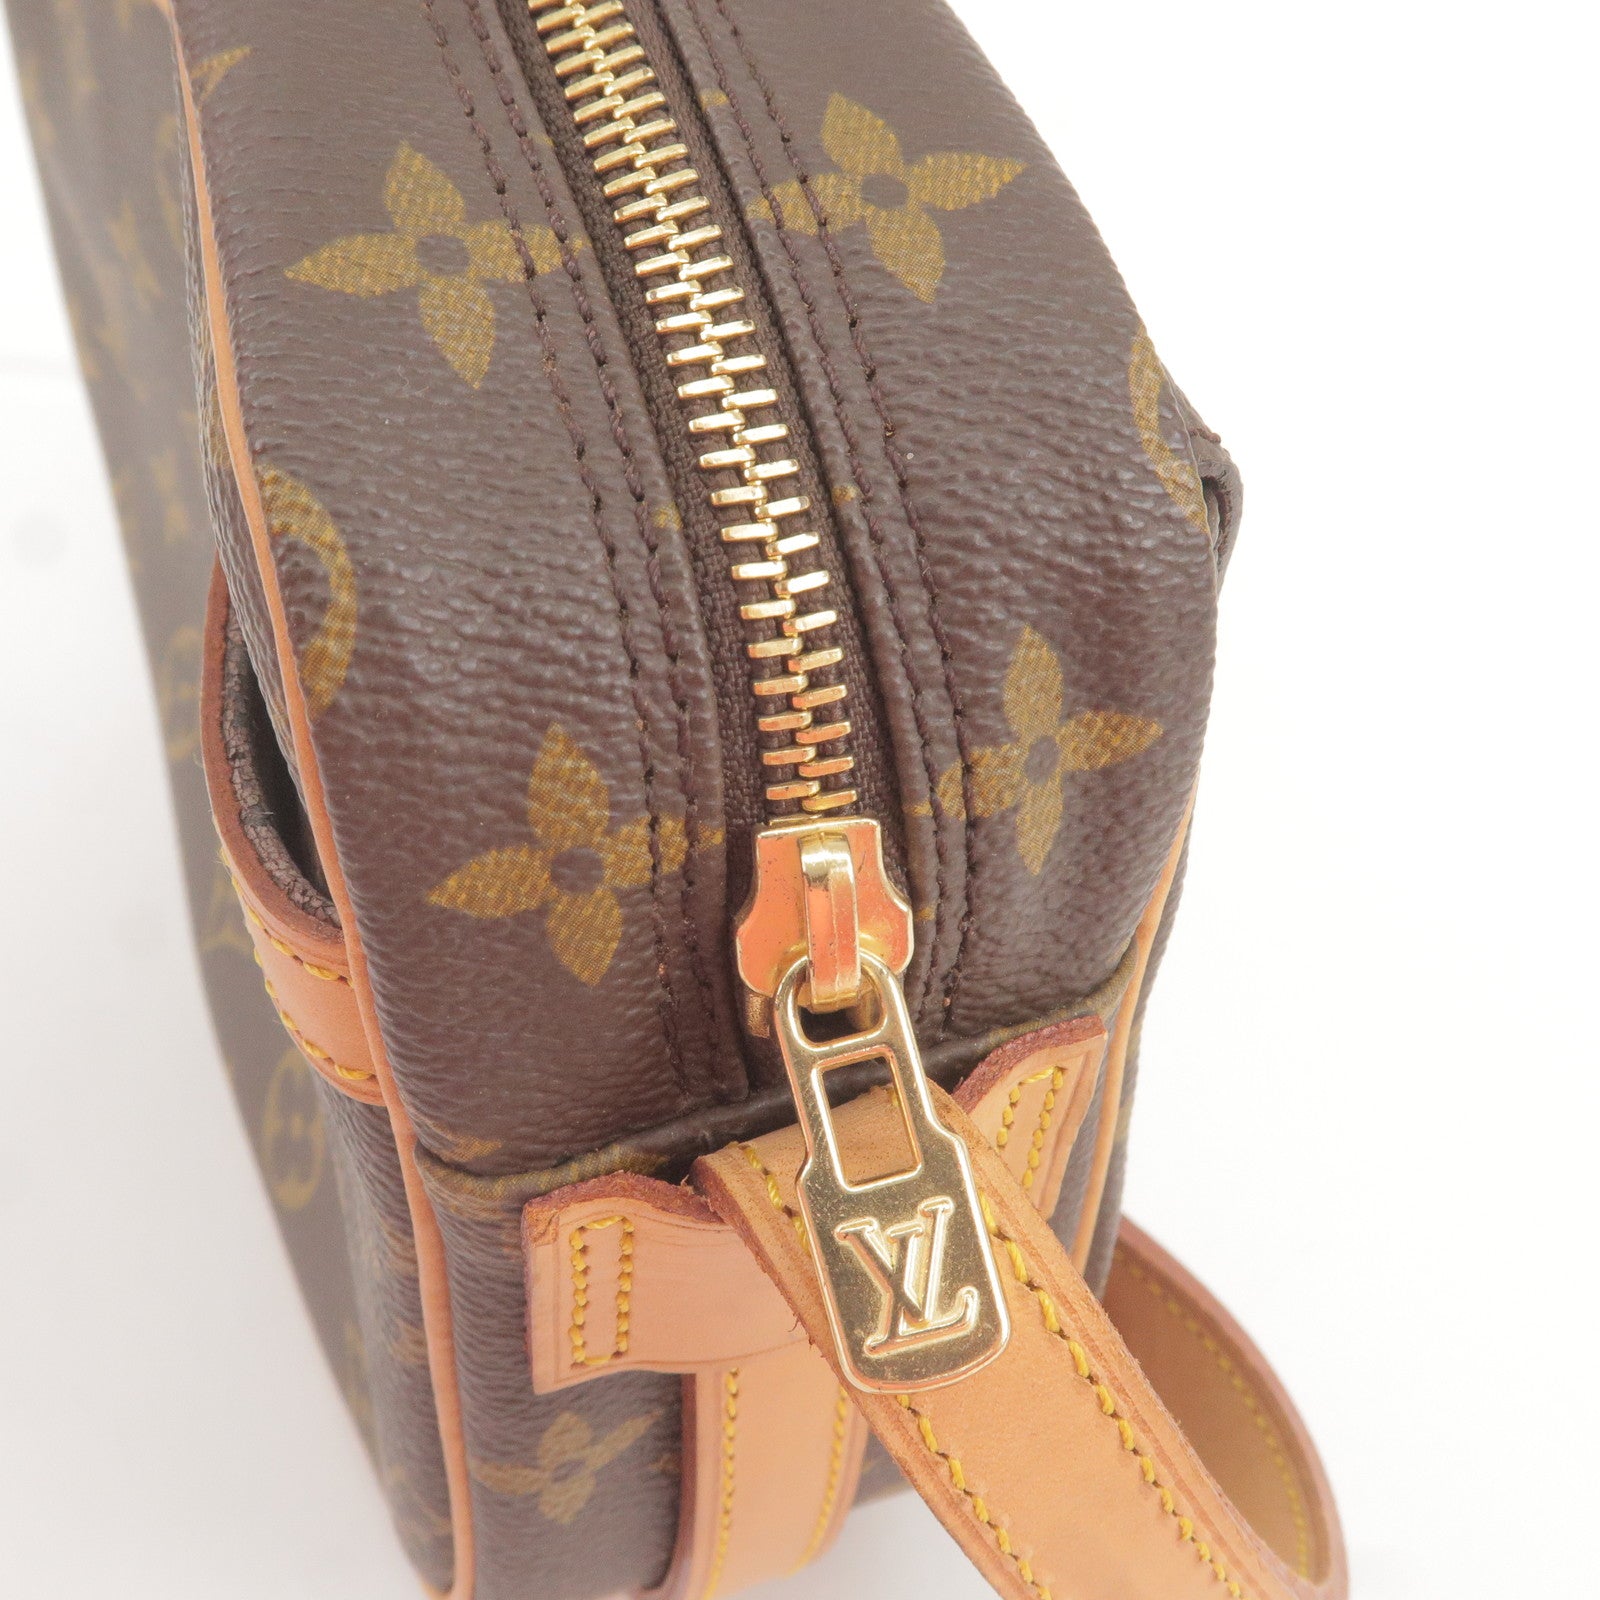 Handbag Louis Vuitton-Paris made in France in leather di…